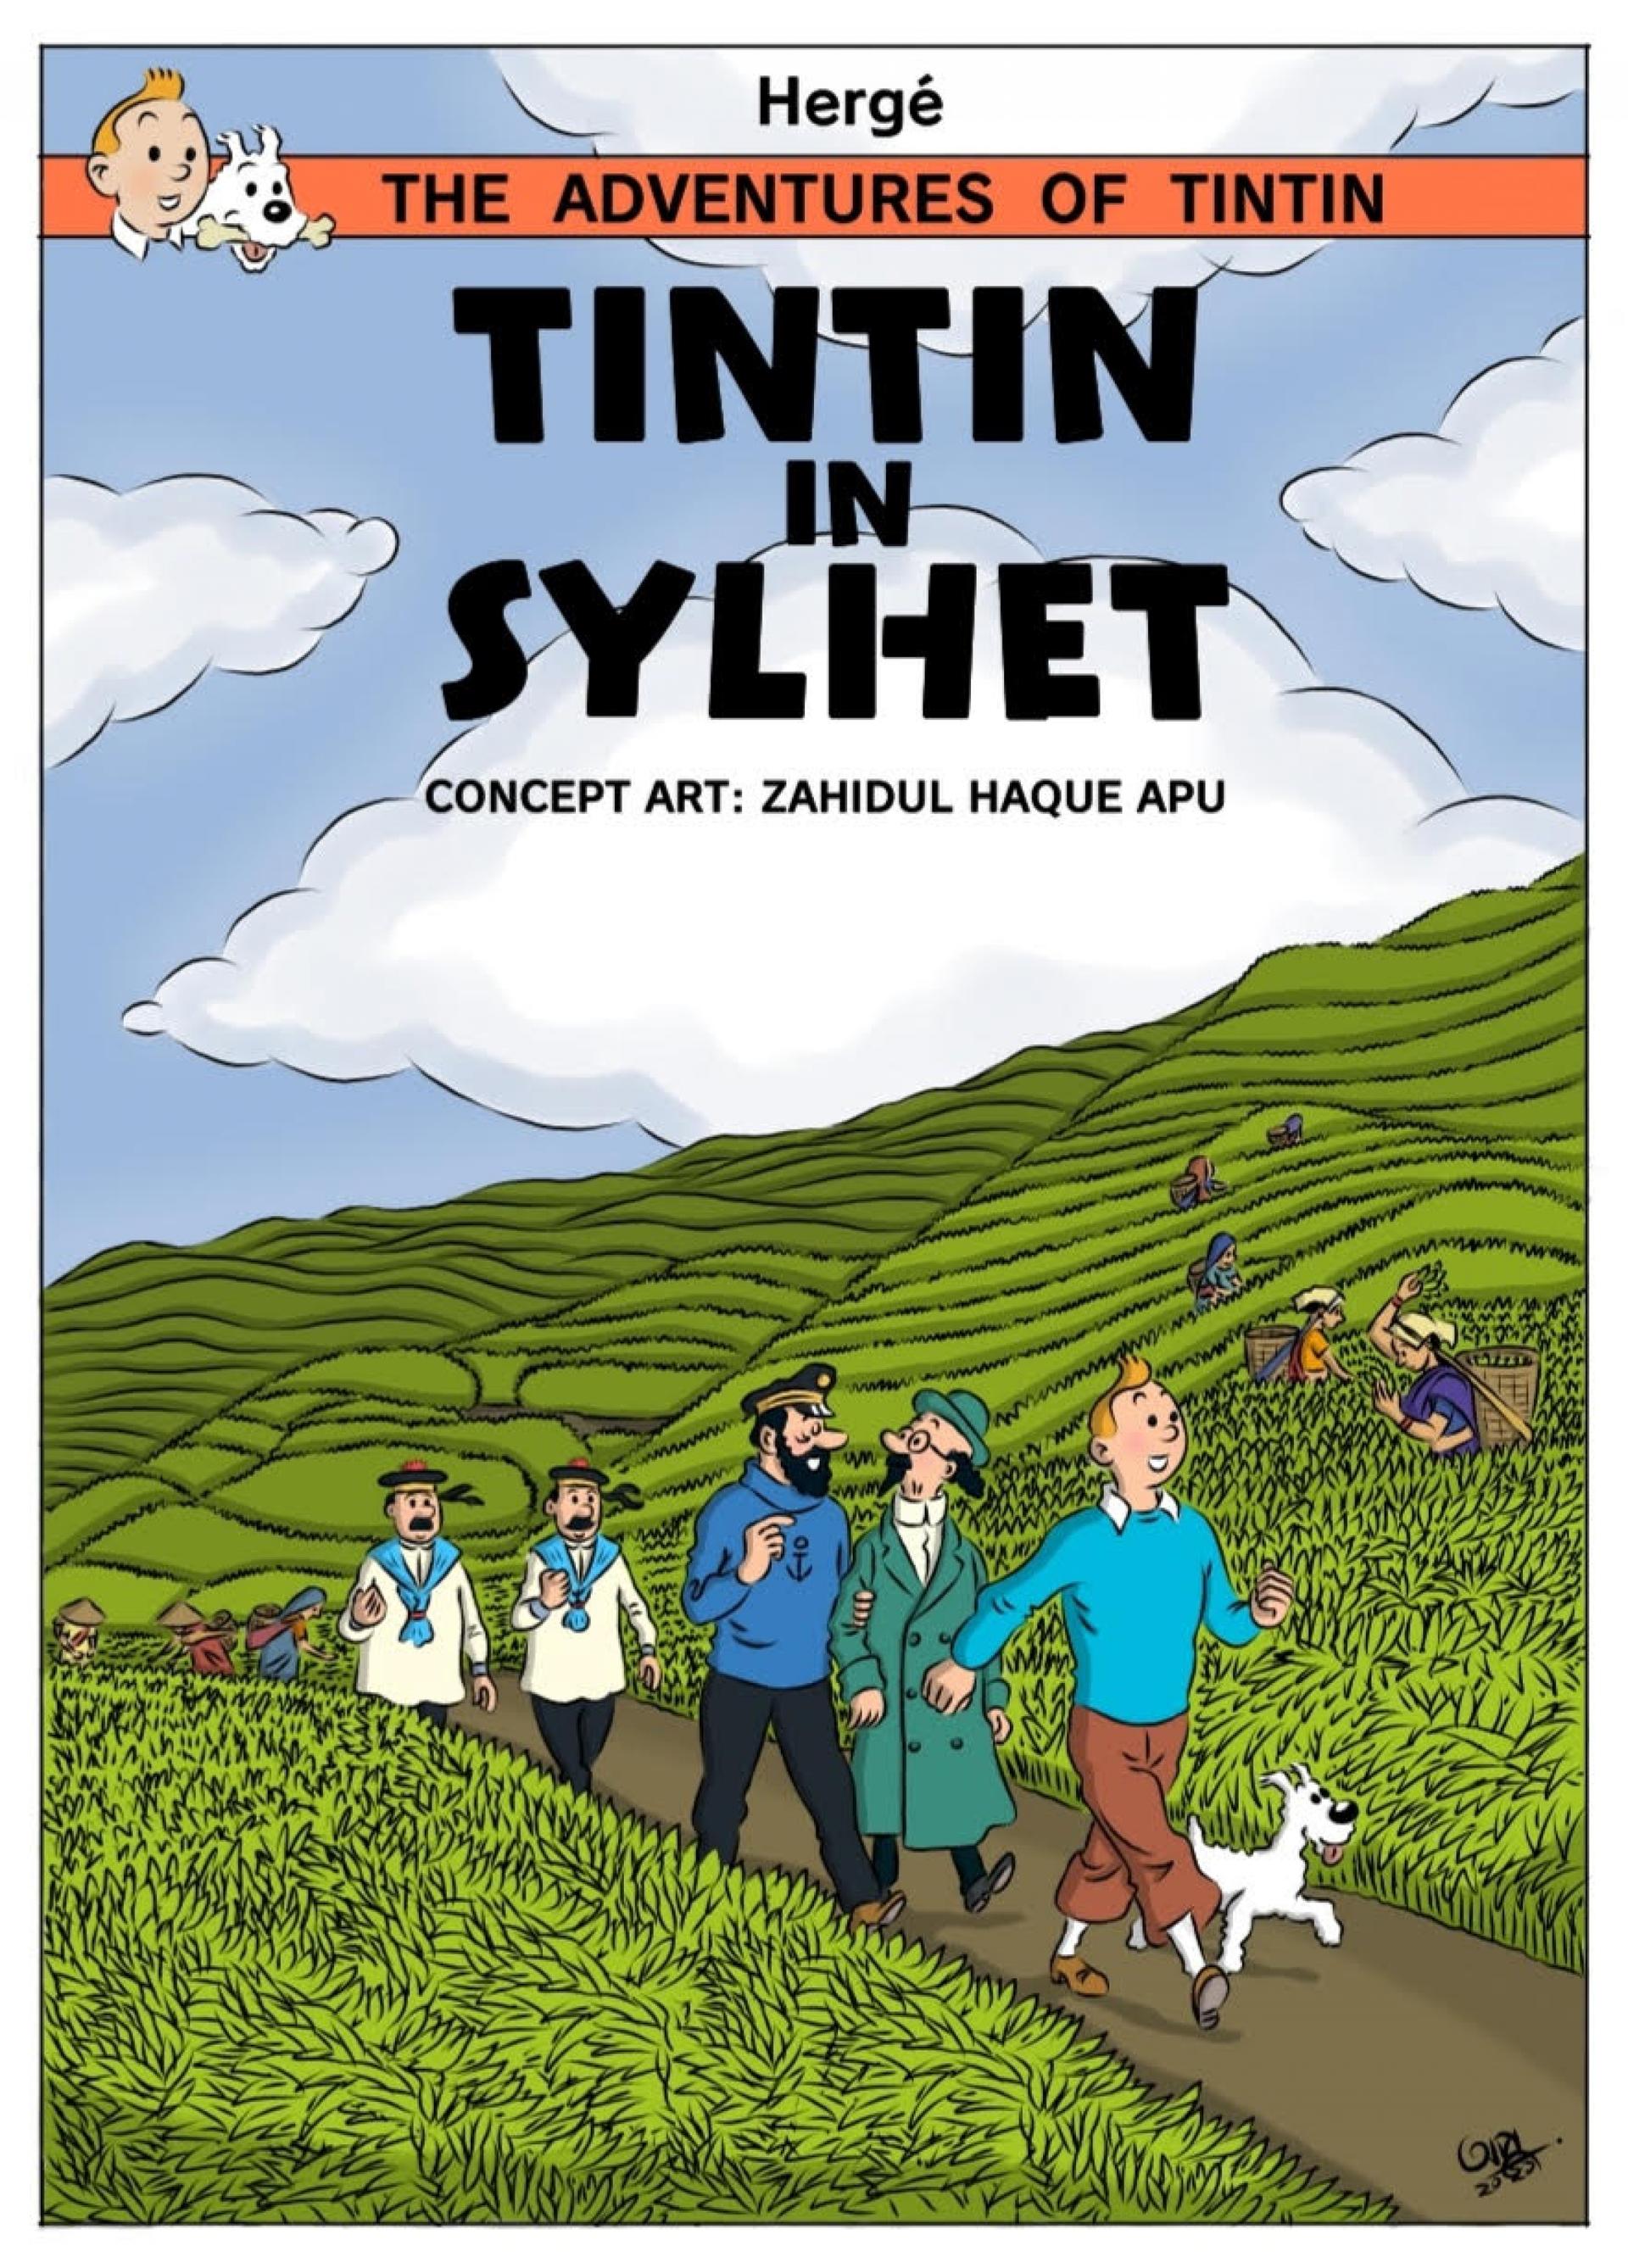 Cover art of character Tintin in Sylhet, Bangladesh